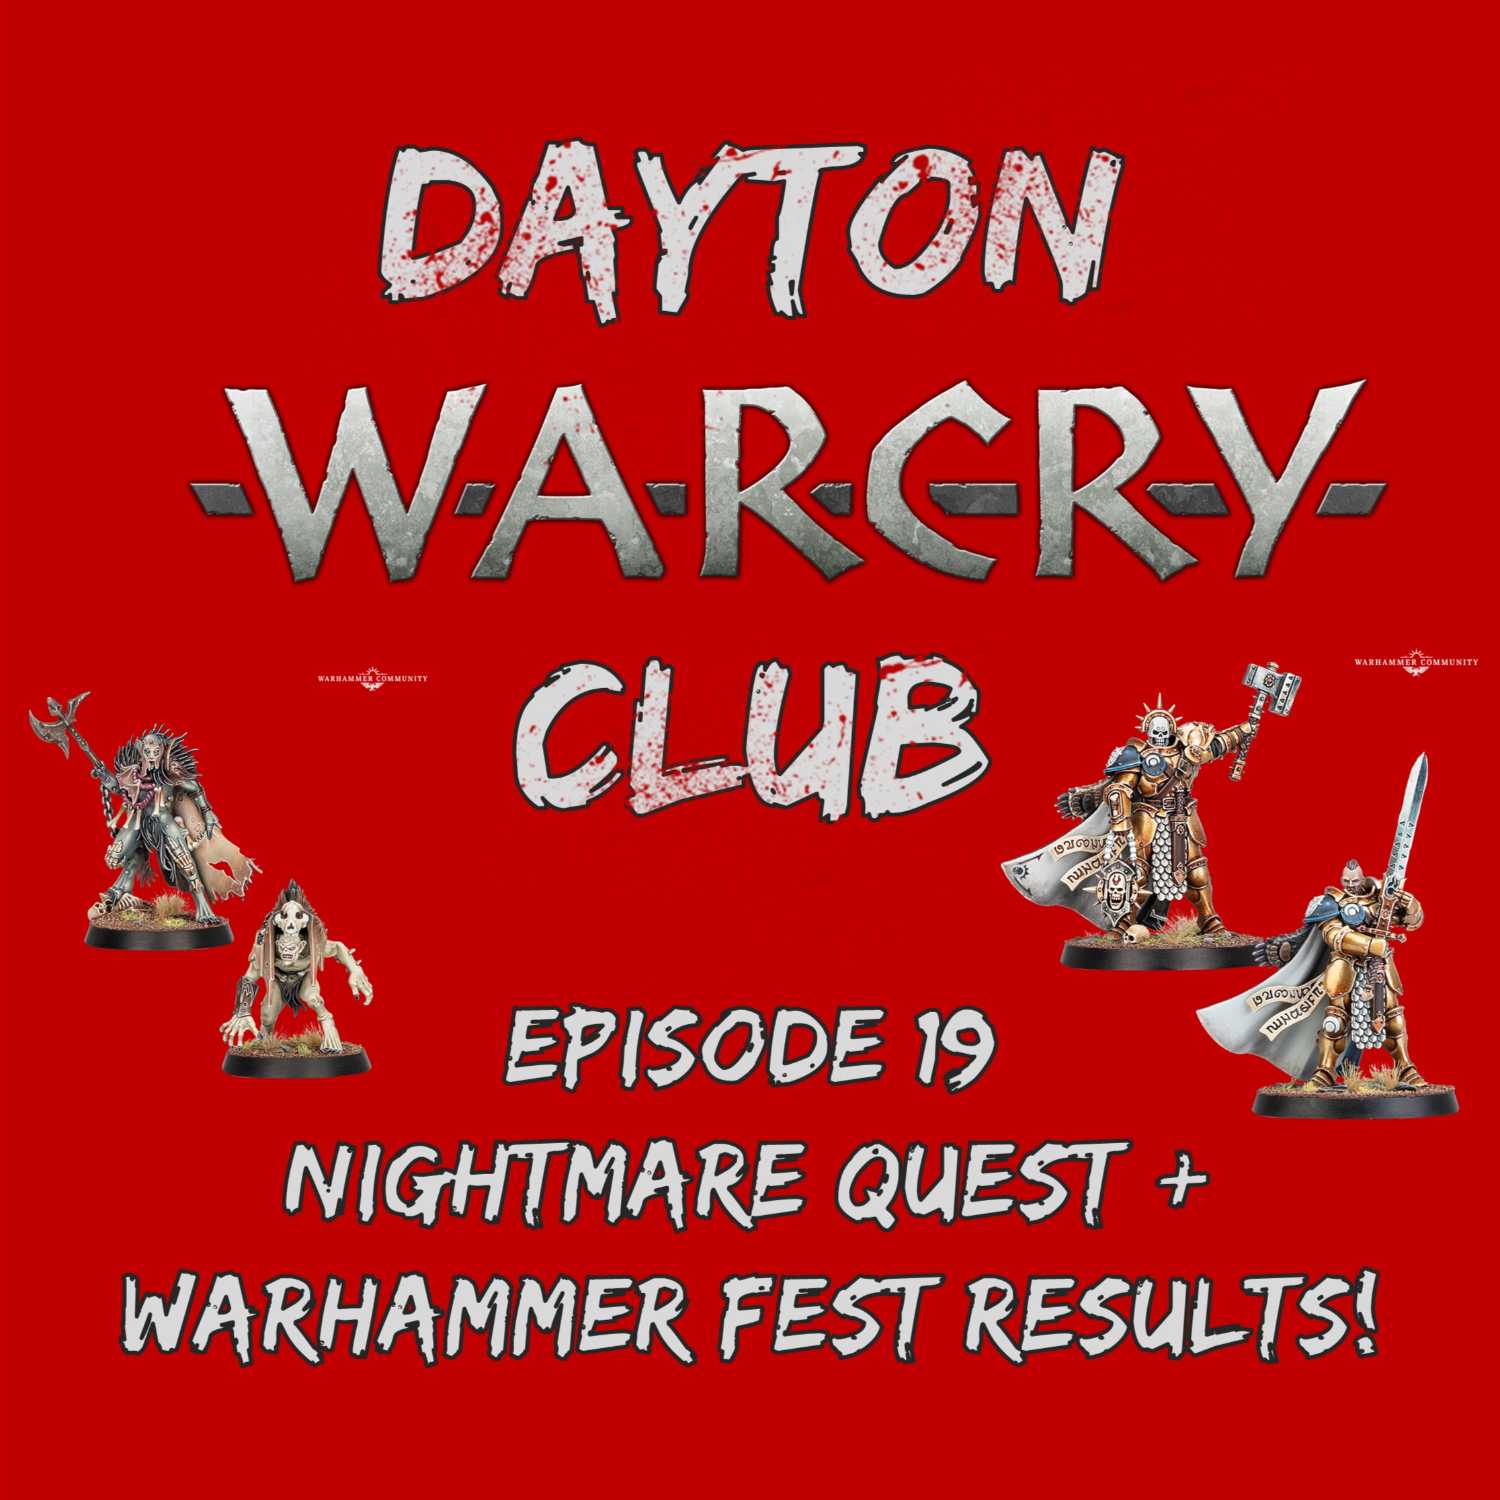 Dayton Warcry Club Episode 19: Nightmare Quest +Warhammer Fest Results!